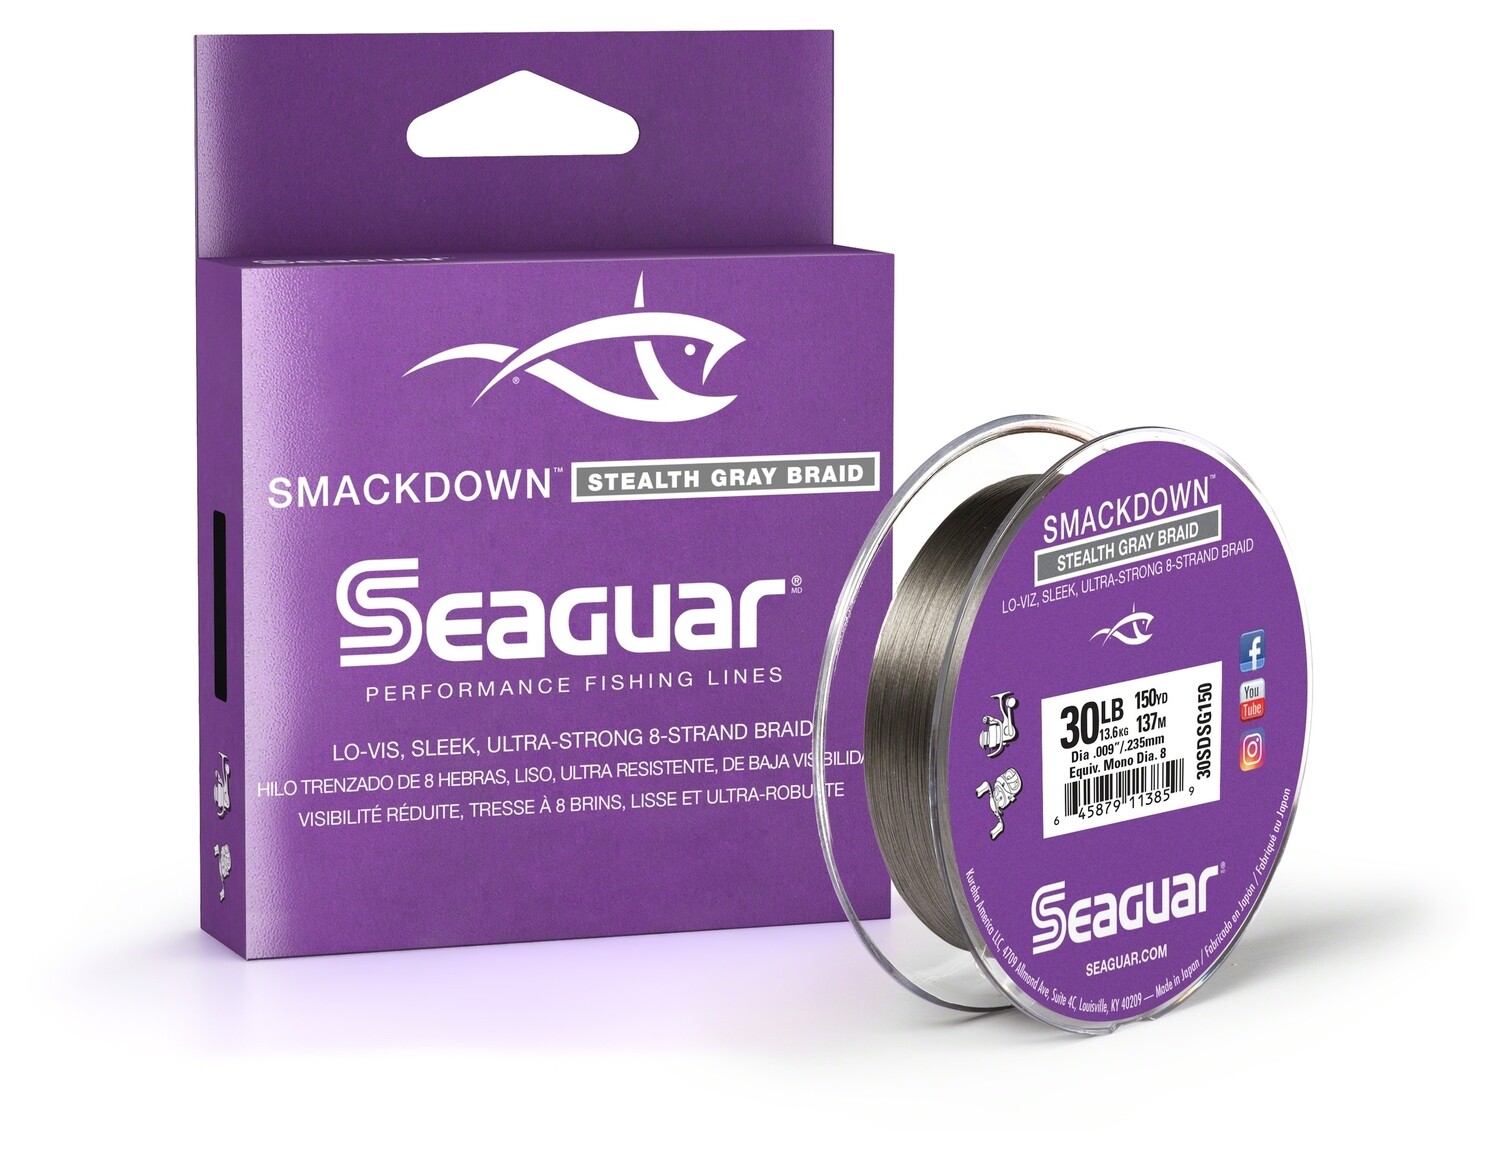 Seaguar Smackdown Braid 30 lb Stealth Gray 150 yd